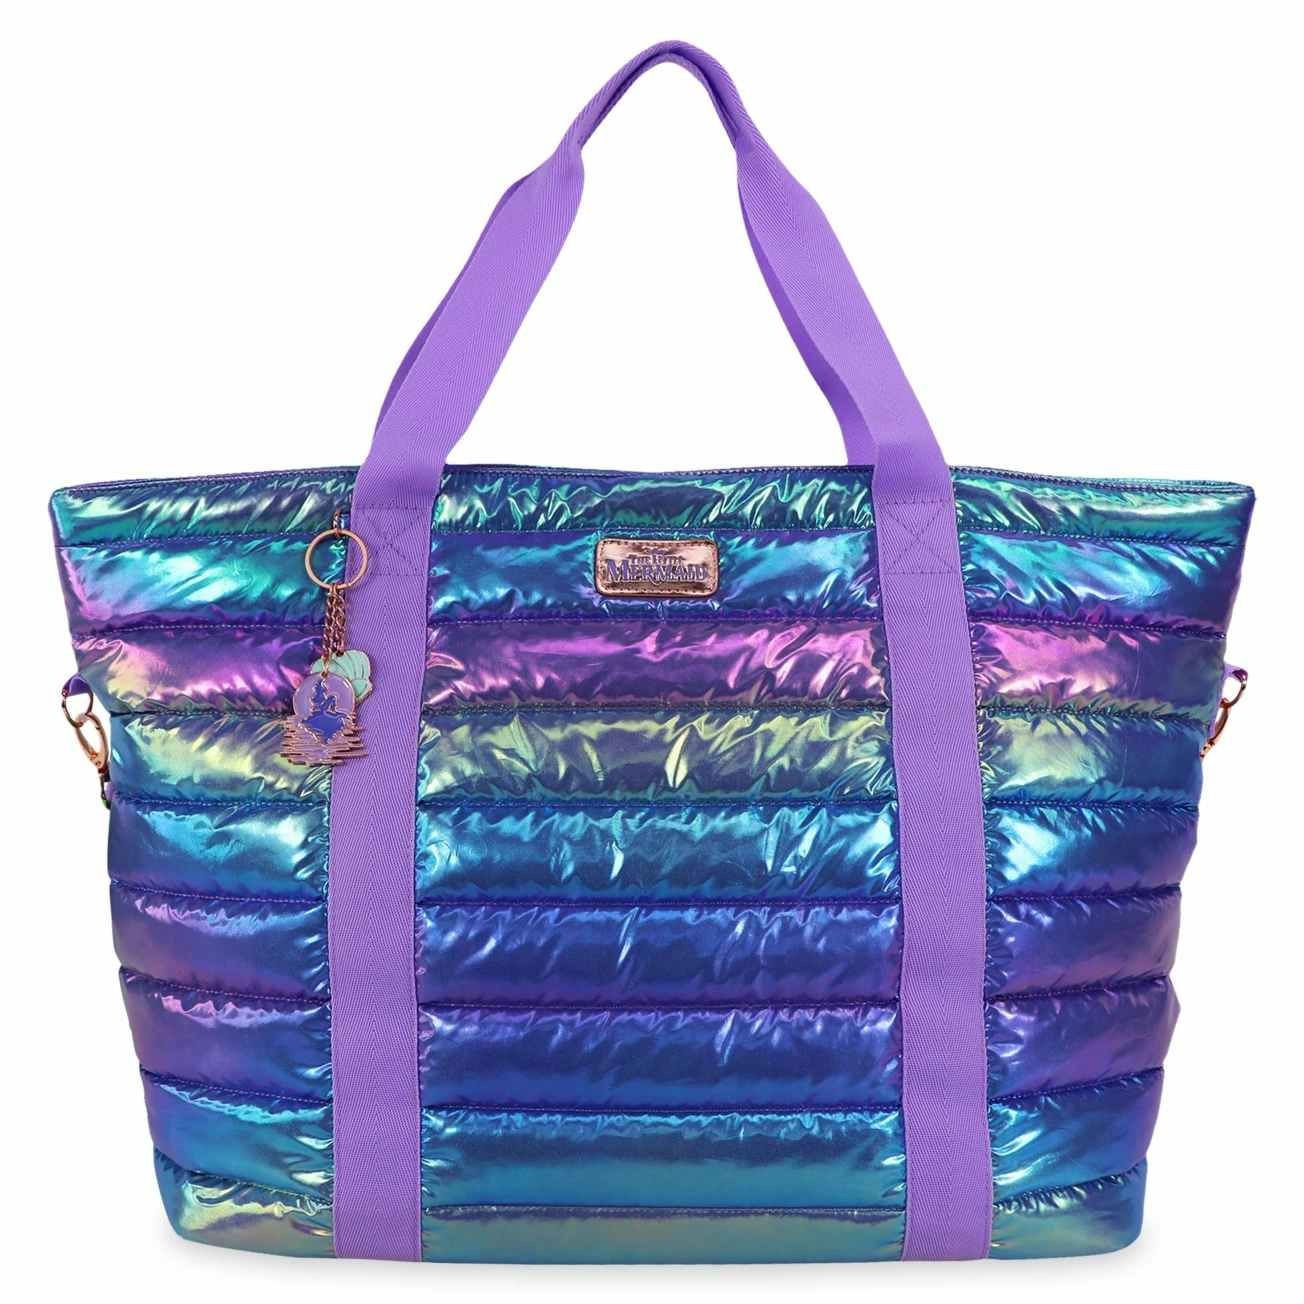 Purple metallic Little Mermaid tote bag